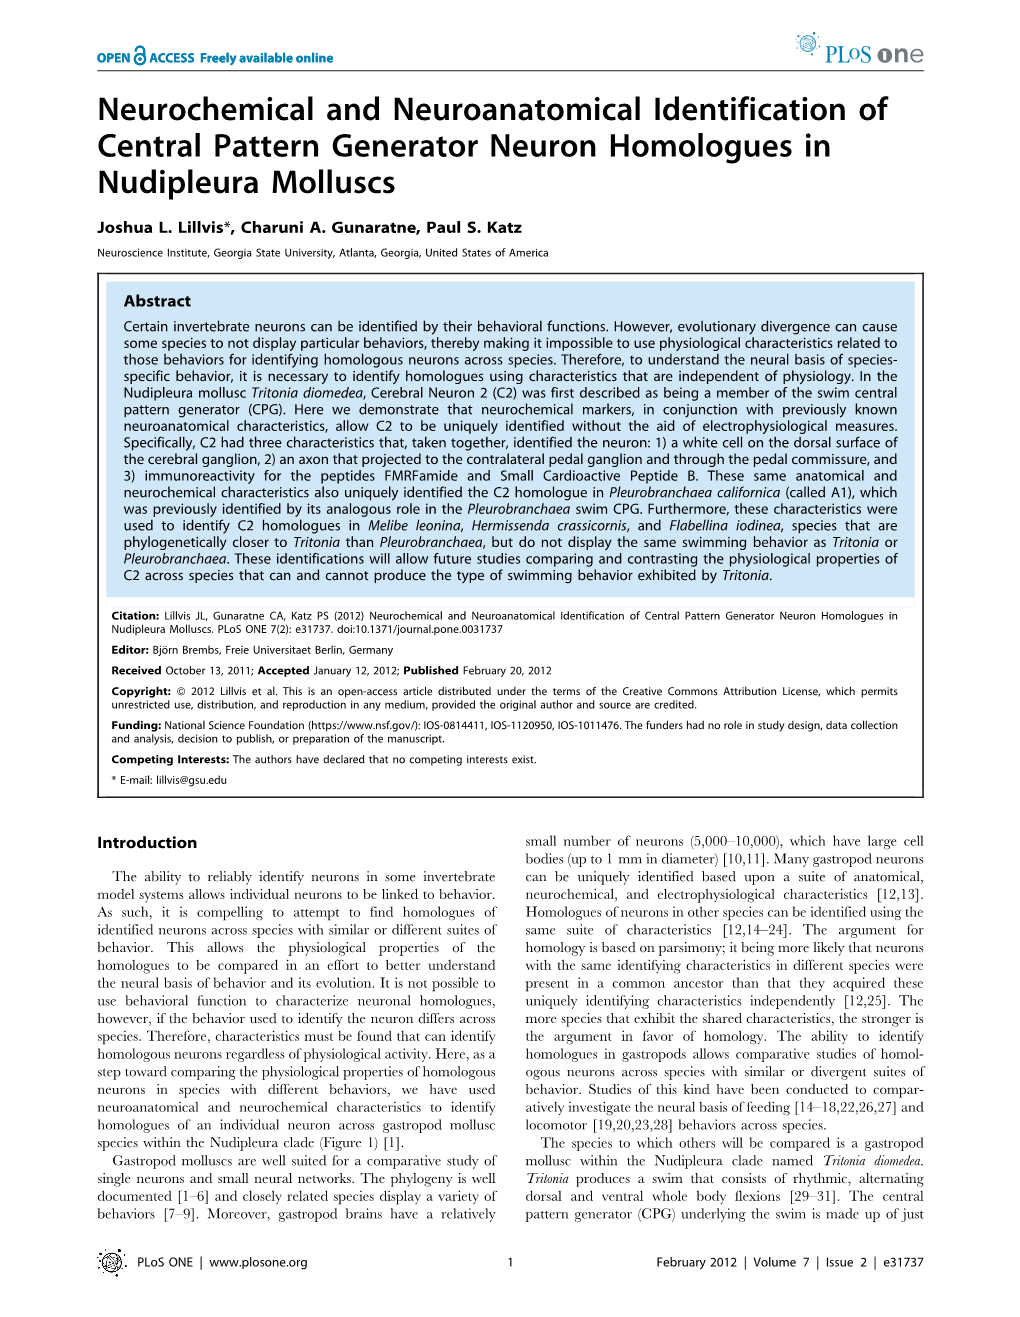 Neurochemical and Neuroanatomical Identification of Central Pattern Generator Neuron Homologues in Nudipleura Molluscs